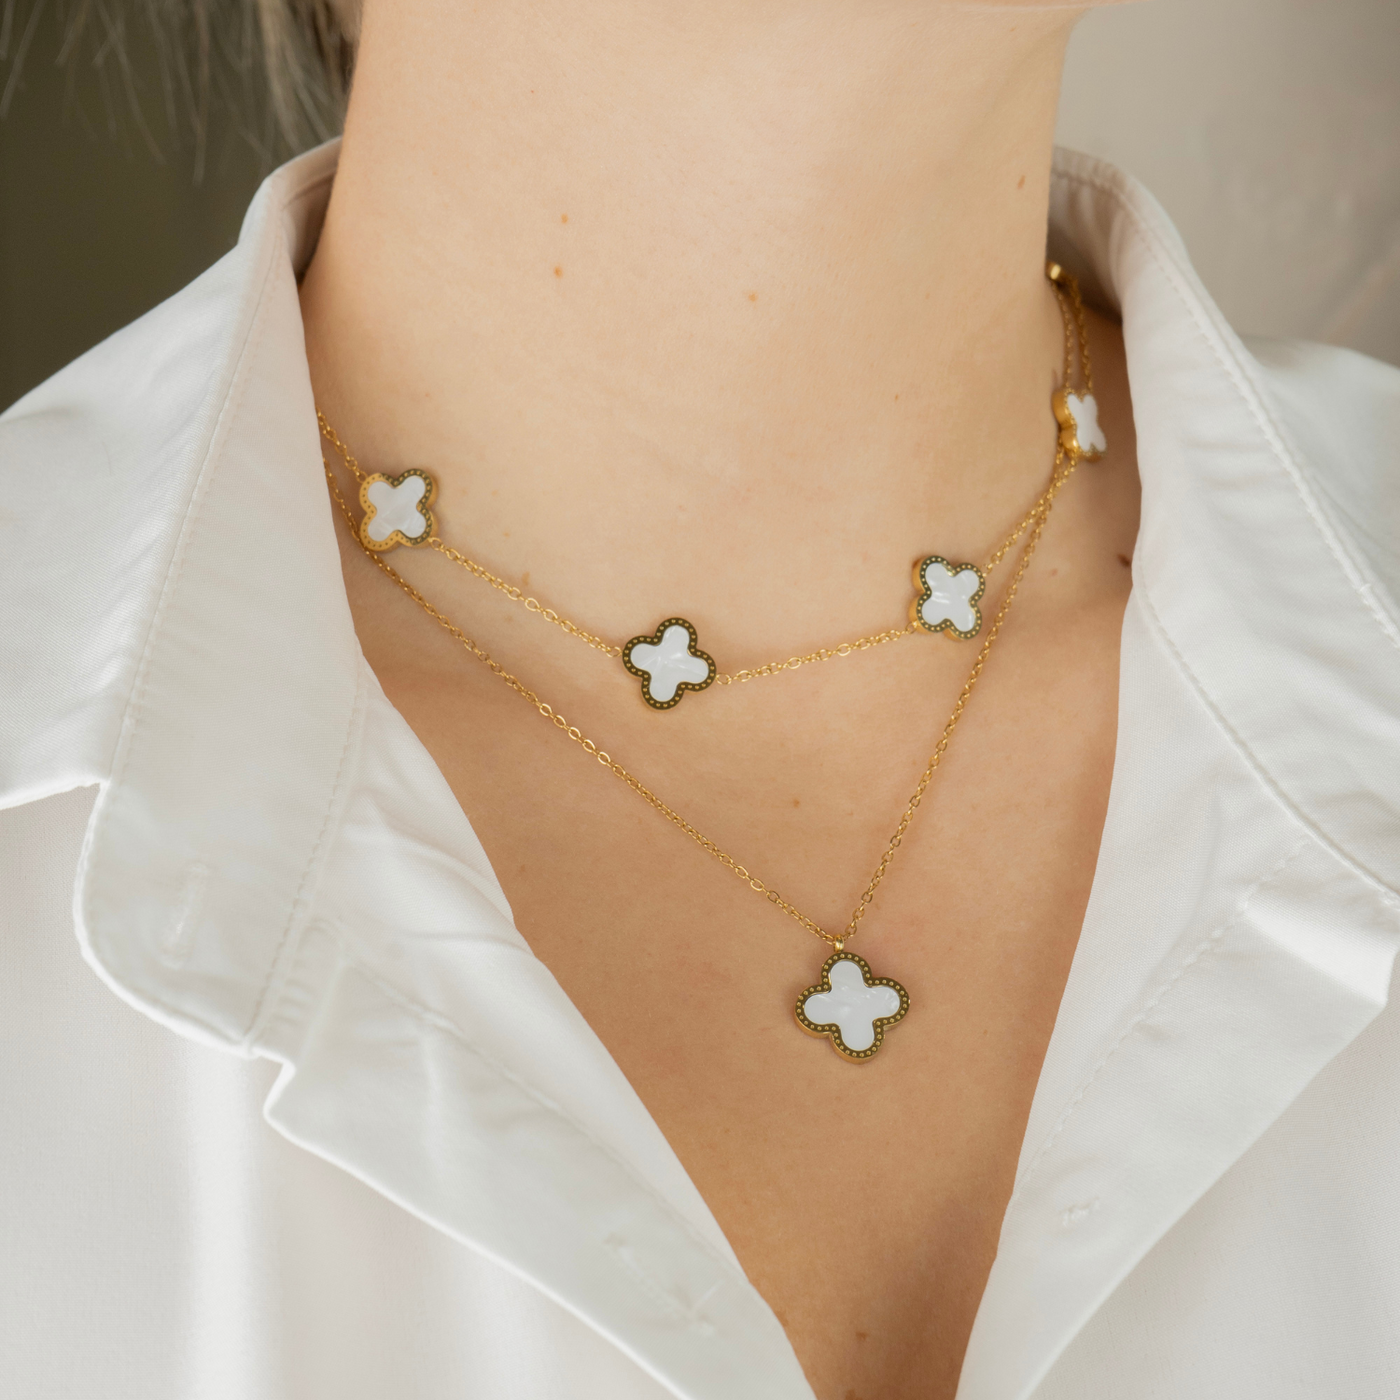 Shiny Clover necklace